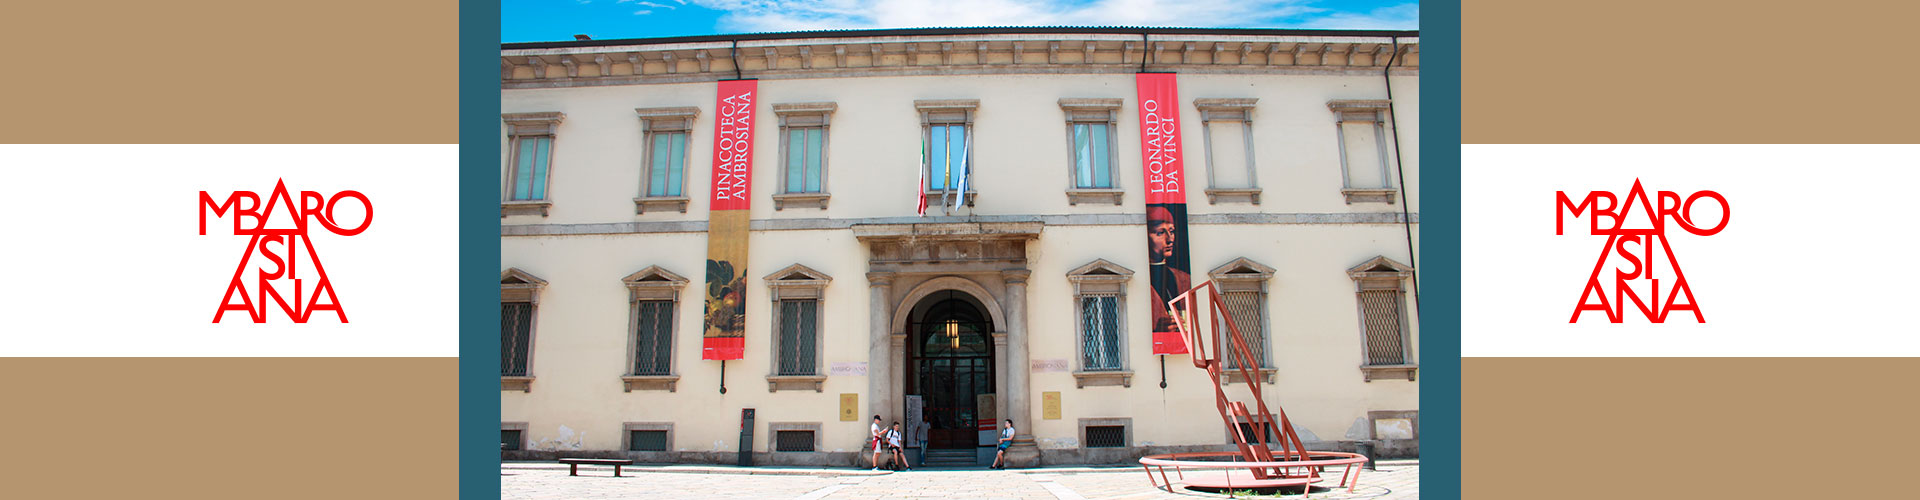 Veneranda Biblioteca Ambrosiana